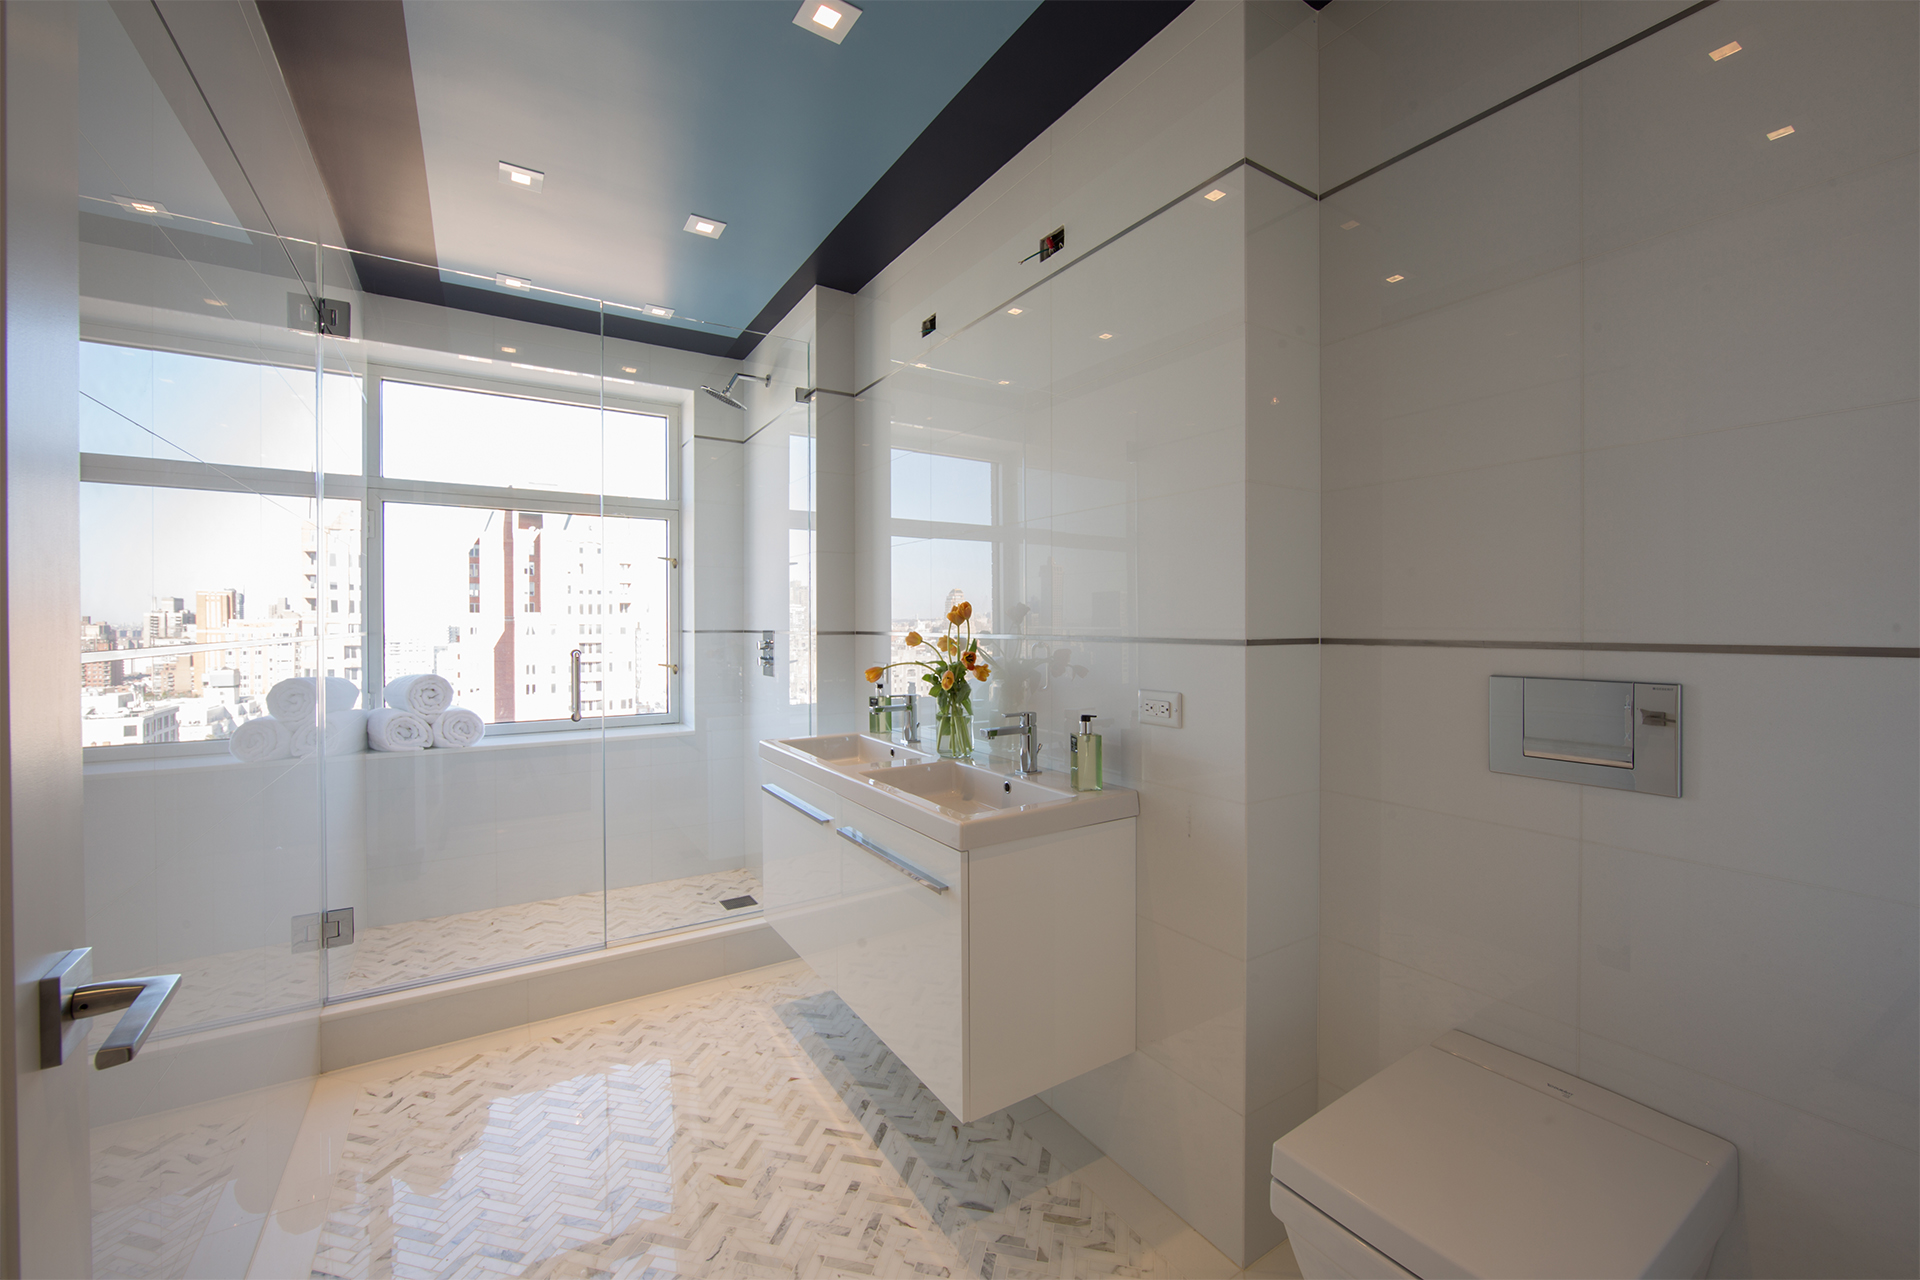 UES New York Residence - Master Bathroom Renovations 2